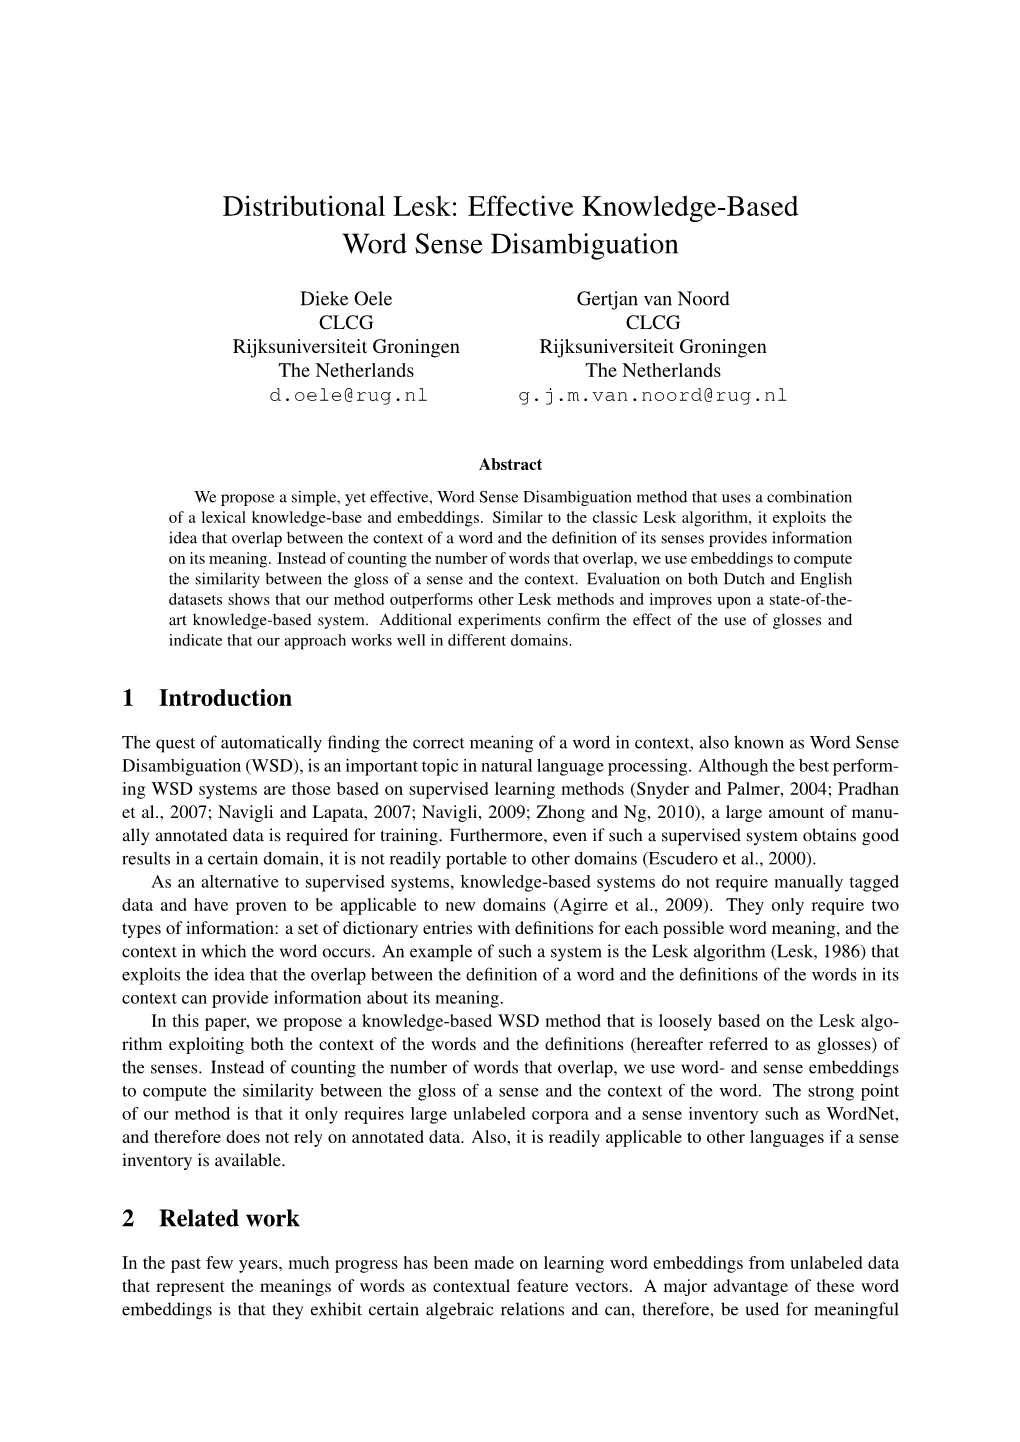 Distributional Lesk: Effective Knowledge-Based Word Sense Disambiguation